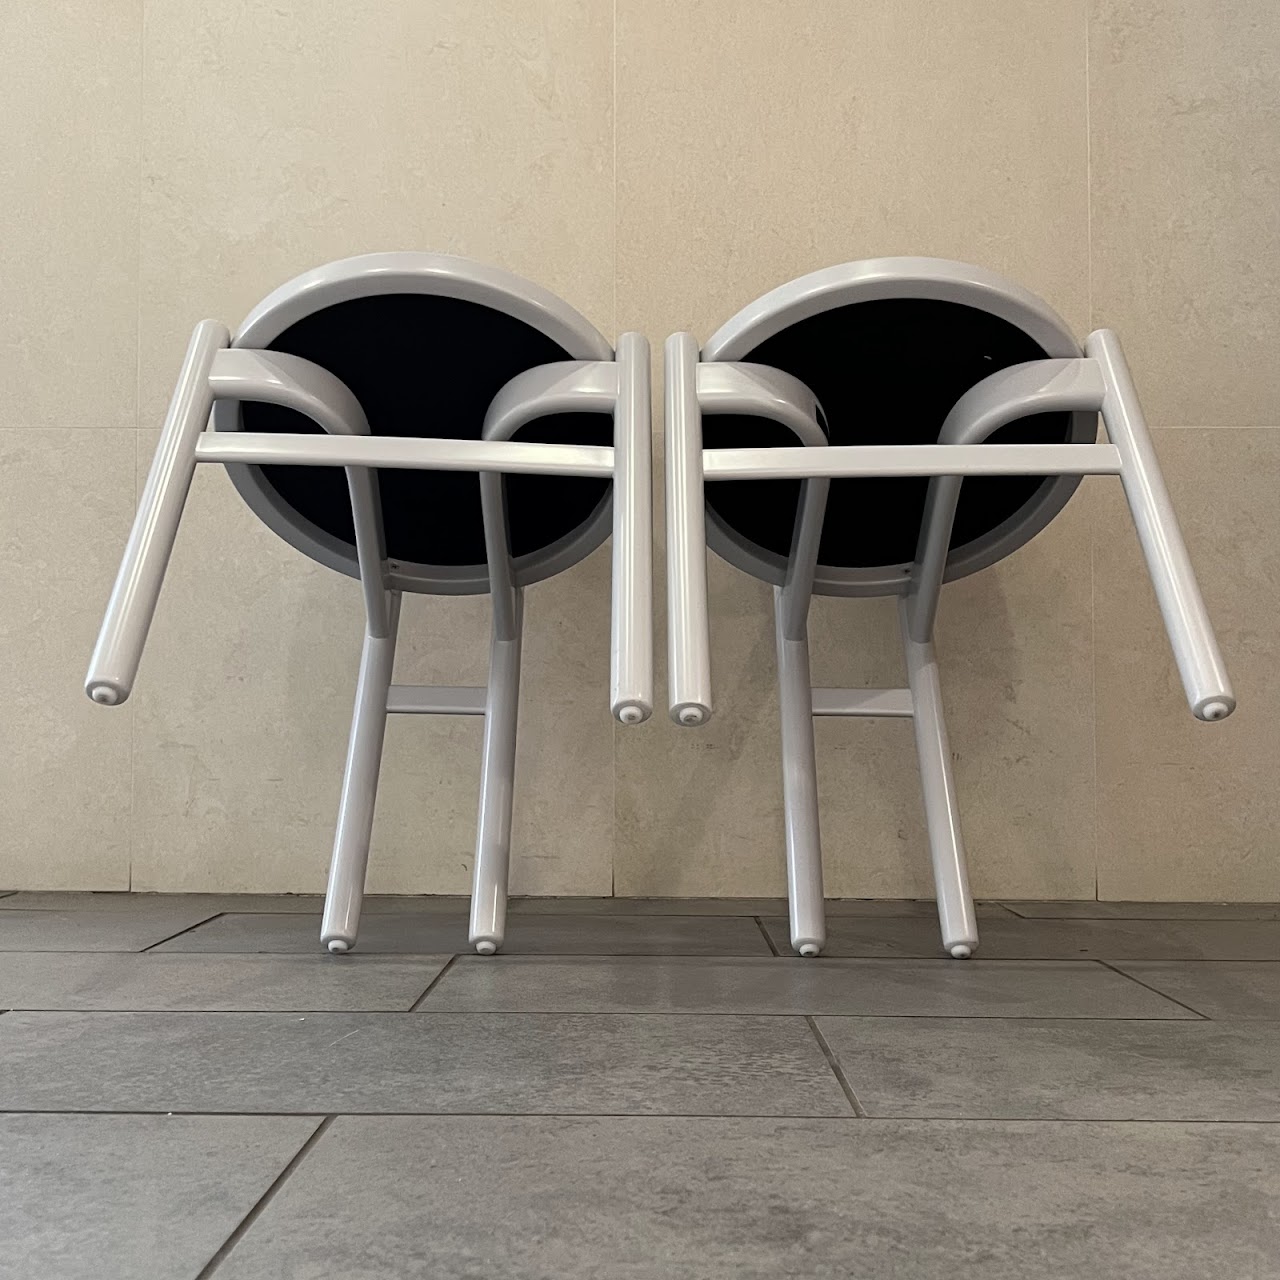 Pozzi Mariano Comense 'Le Sedie' Italian Modernist Chair Pair #1